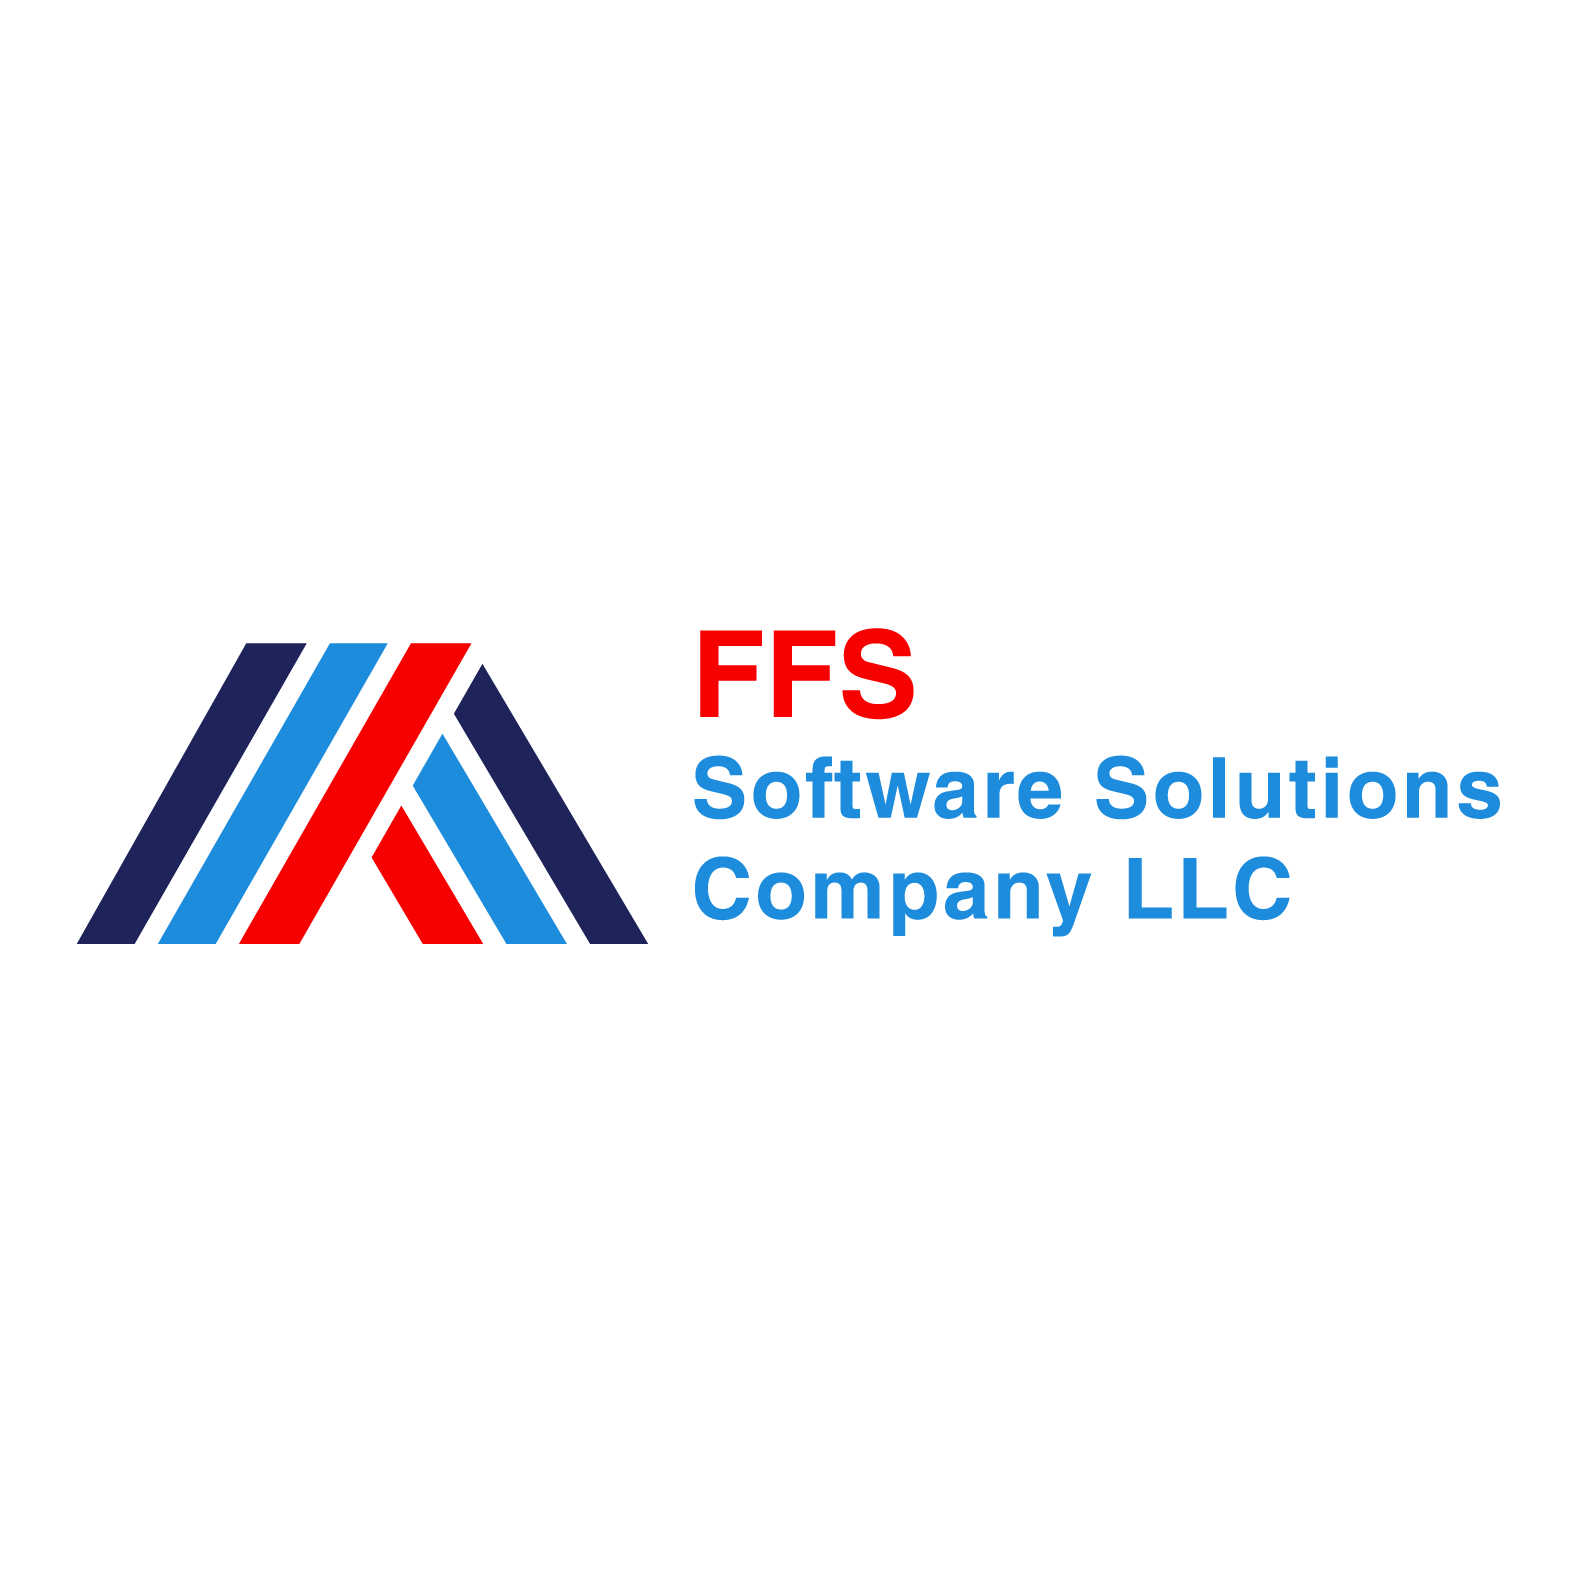 FFS company